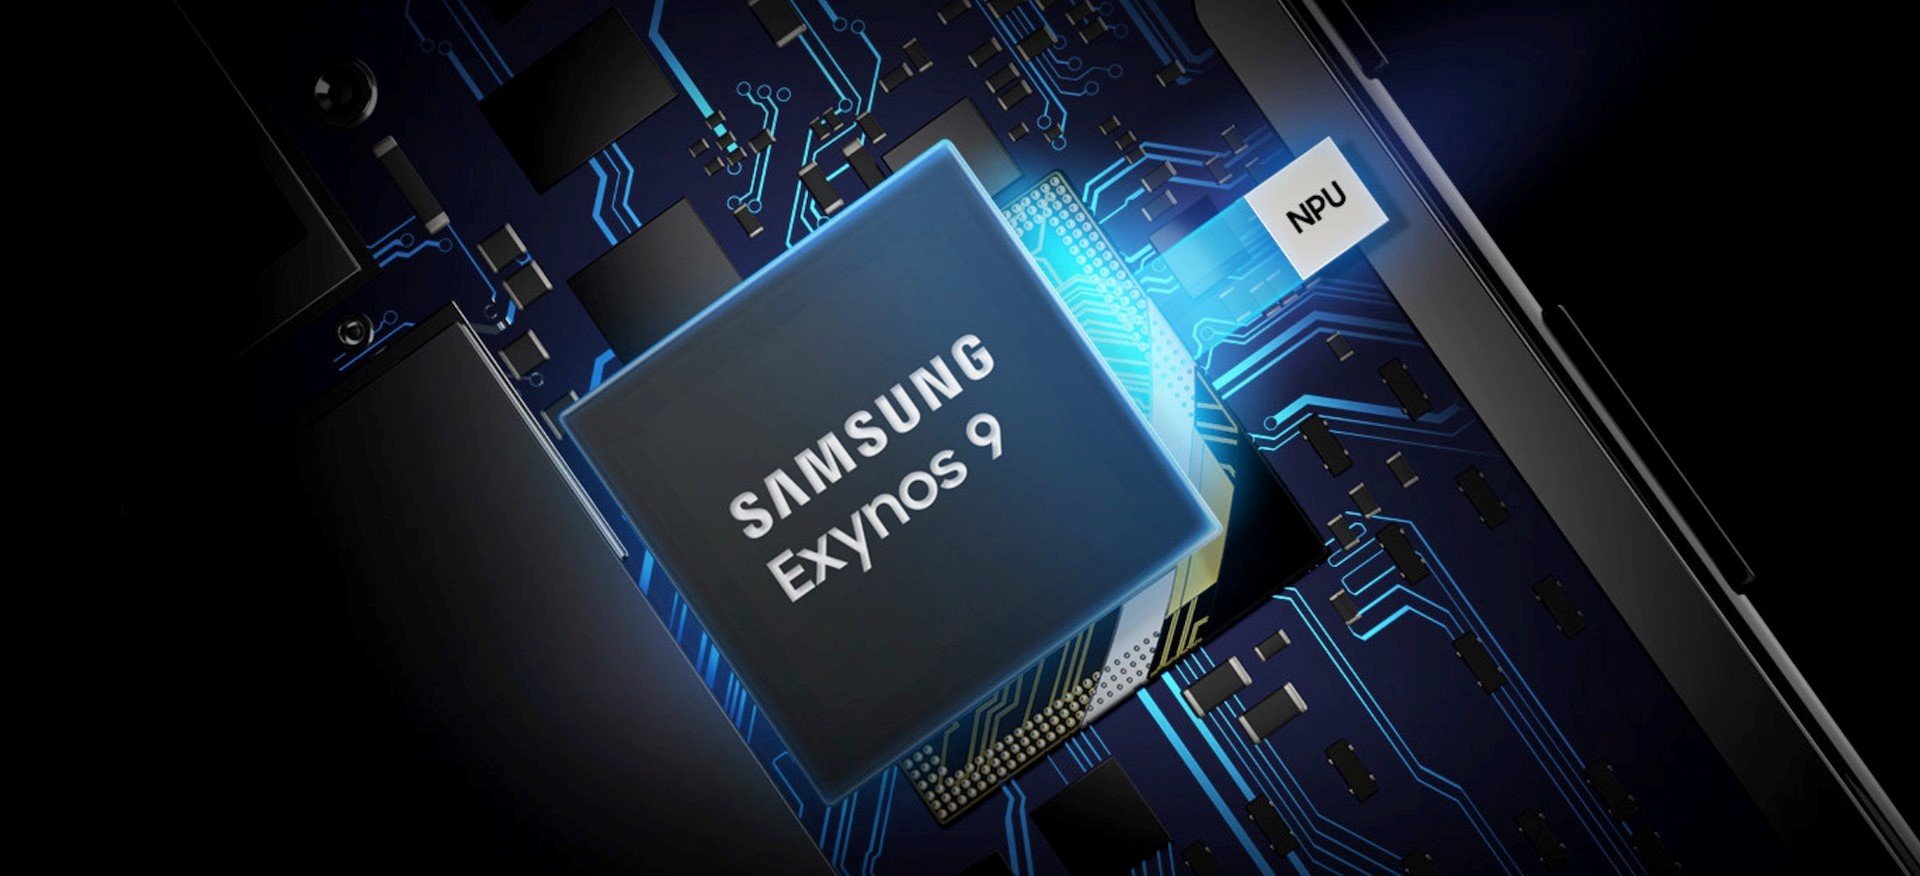 Samsung reportedly designing custom Exynos chipset for Google - SamMobile